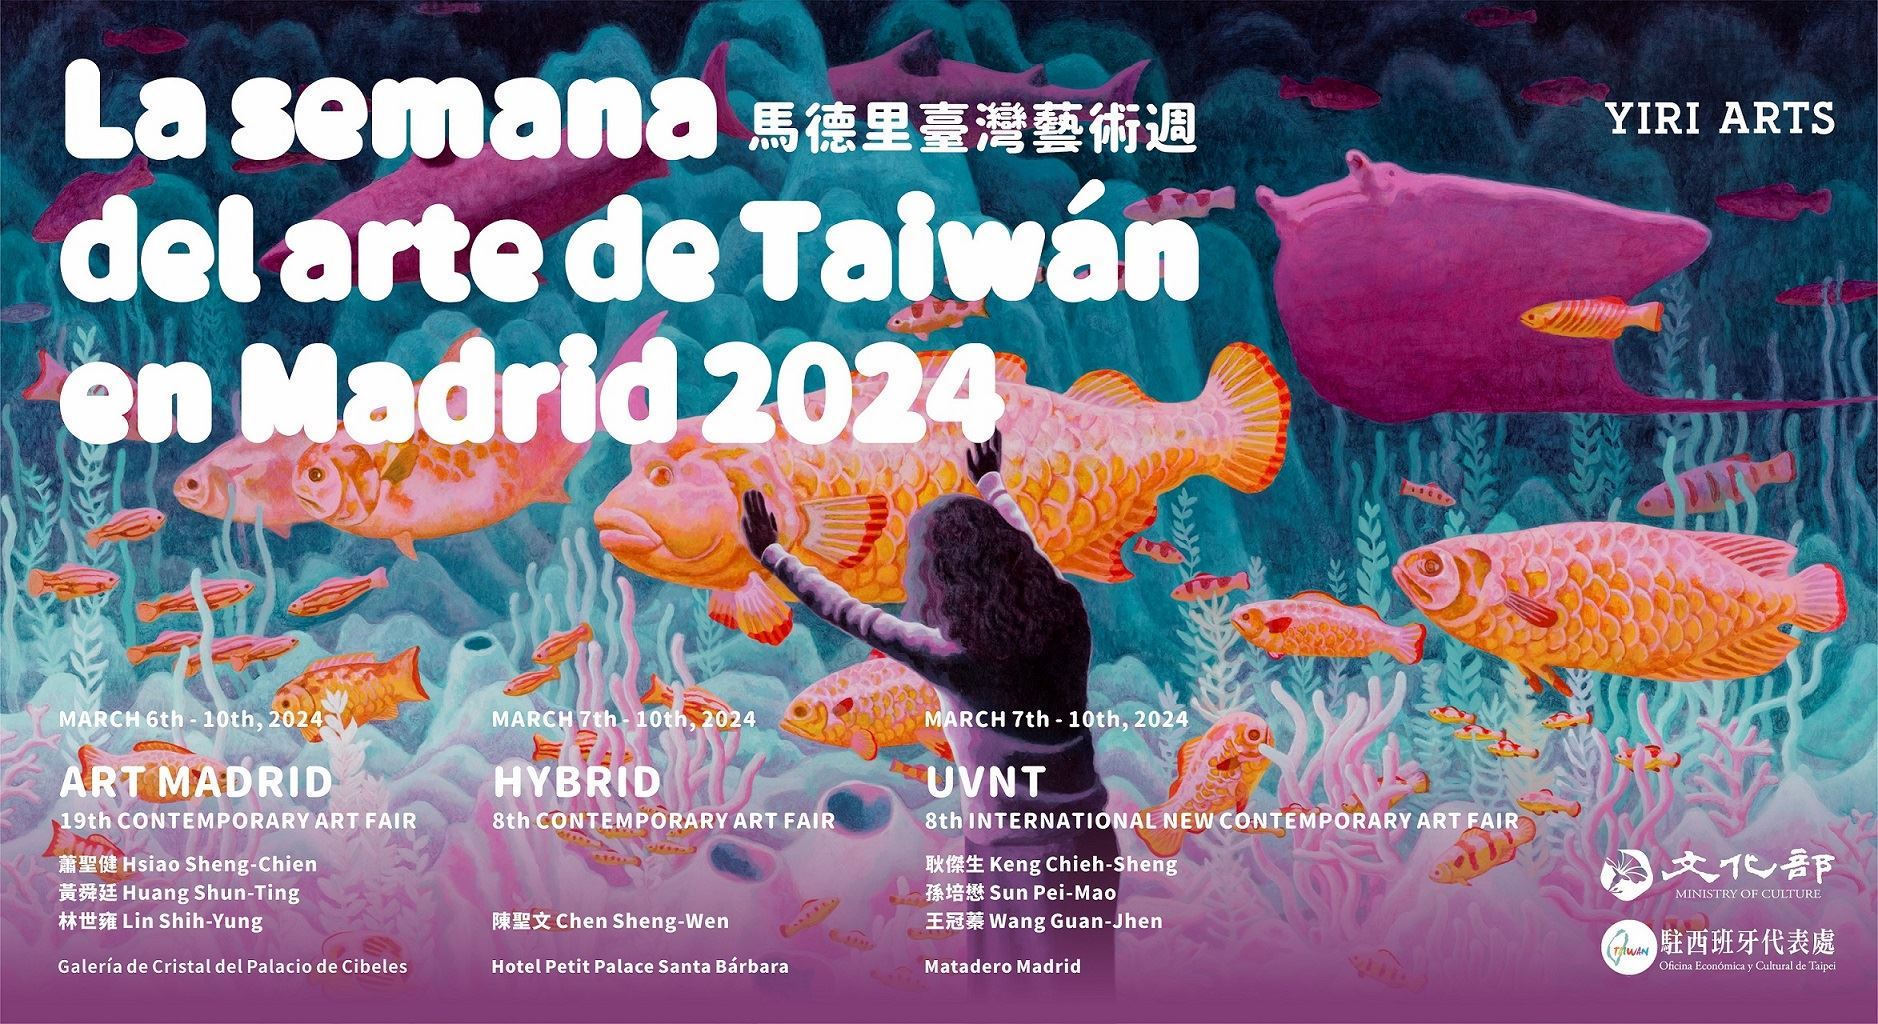 Sept artistes taïwanais présentés à la Semana del Arte de Taiwán en Madrid 2024